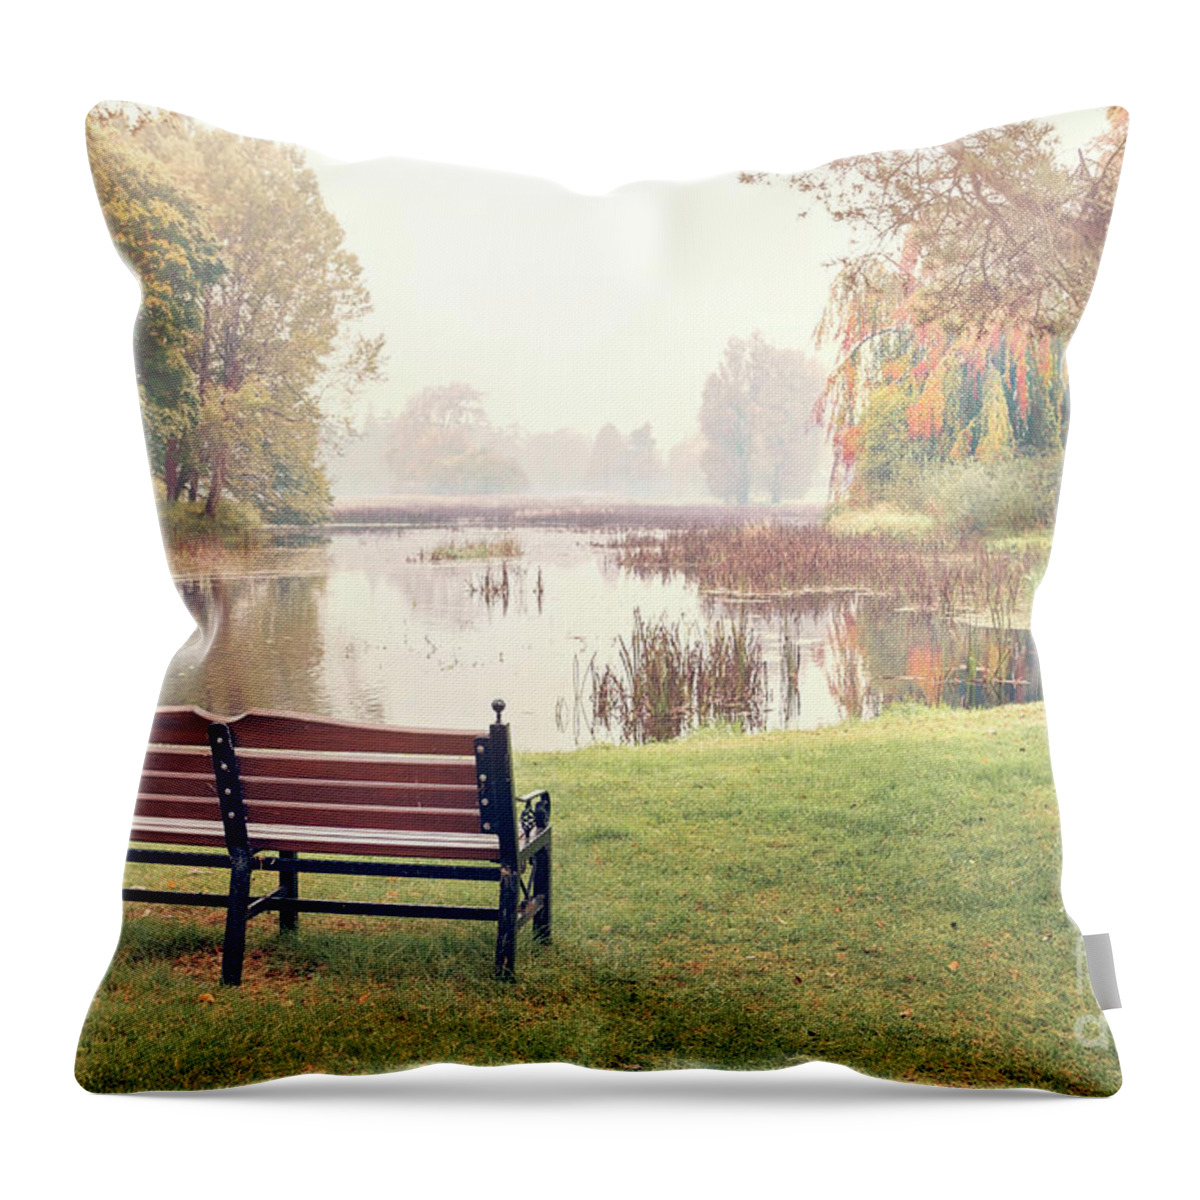 Kremsdorf Throw Pillow featuring the photograph Peace Of Autumn by Evelina Kremsdorf